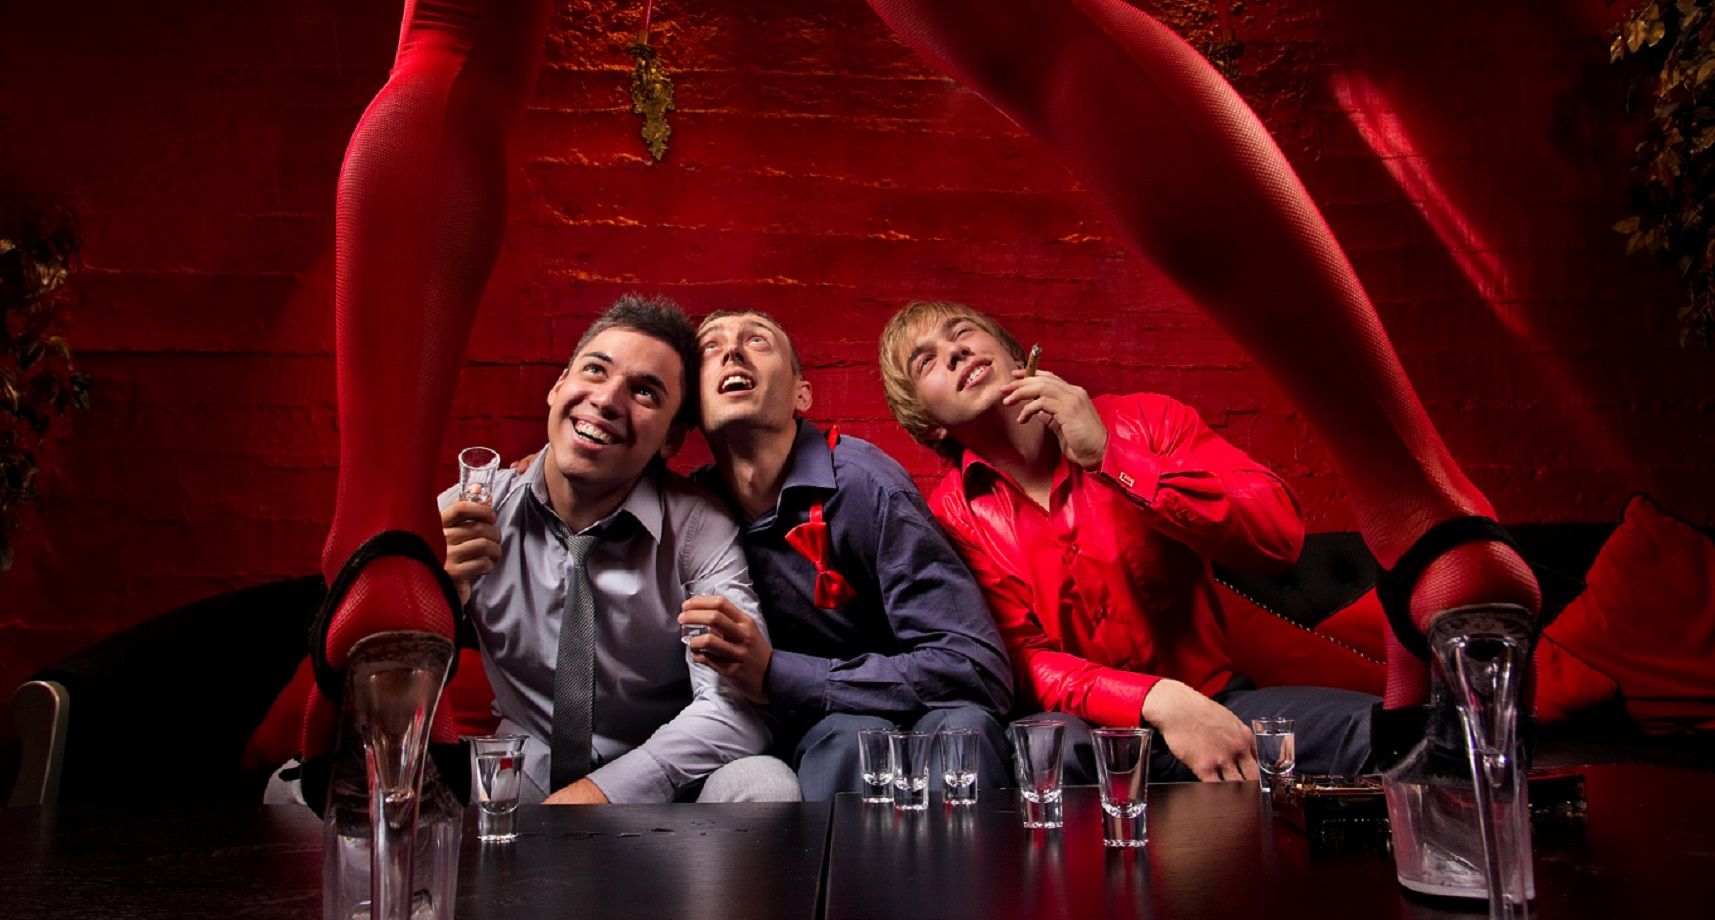 Orgy In Male Strip Club